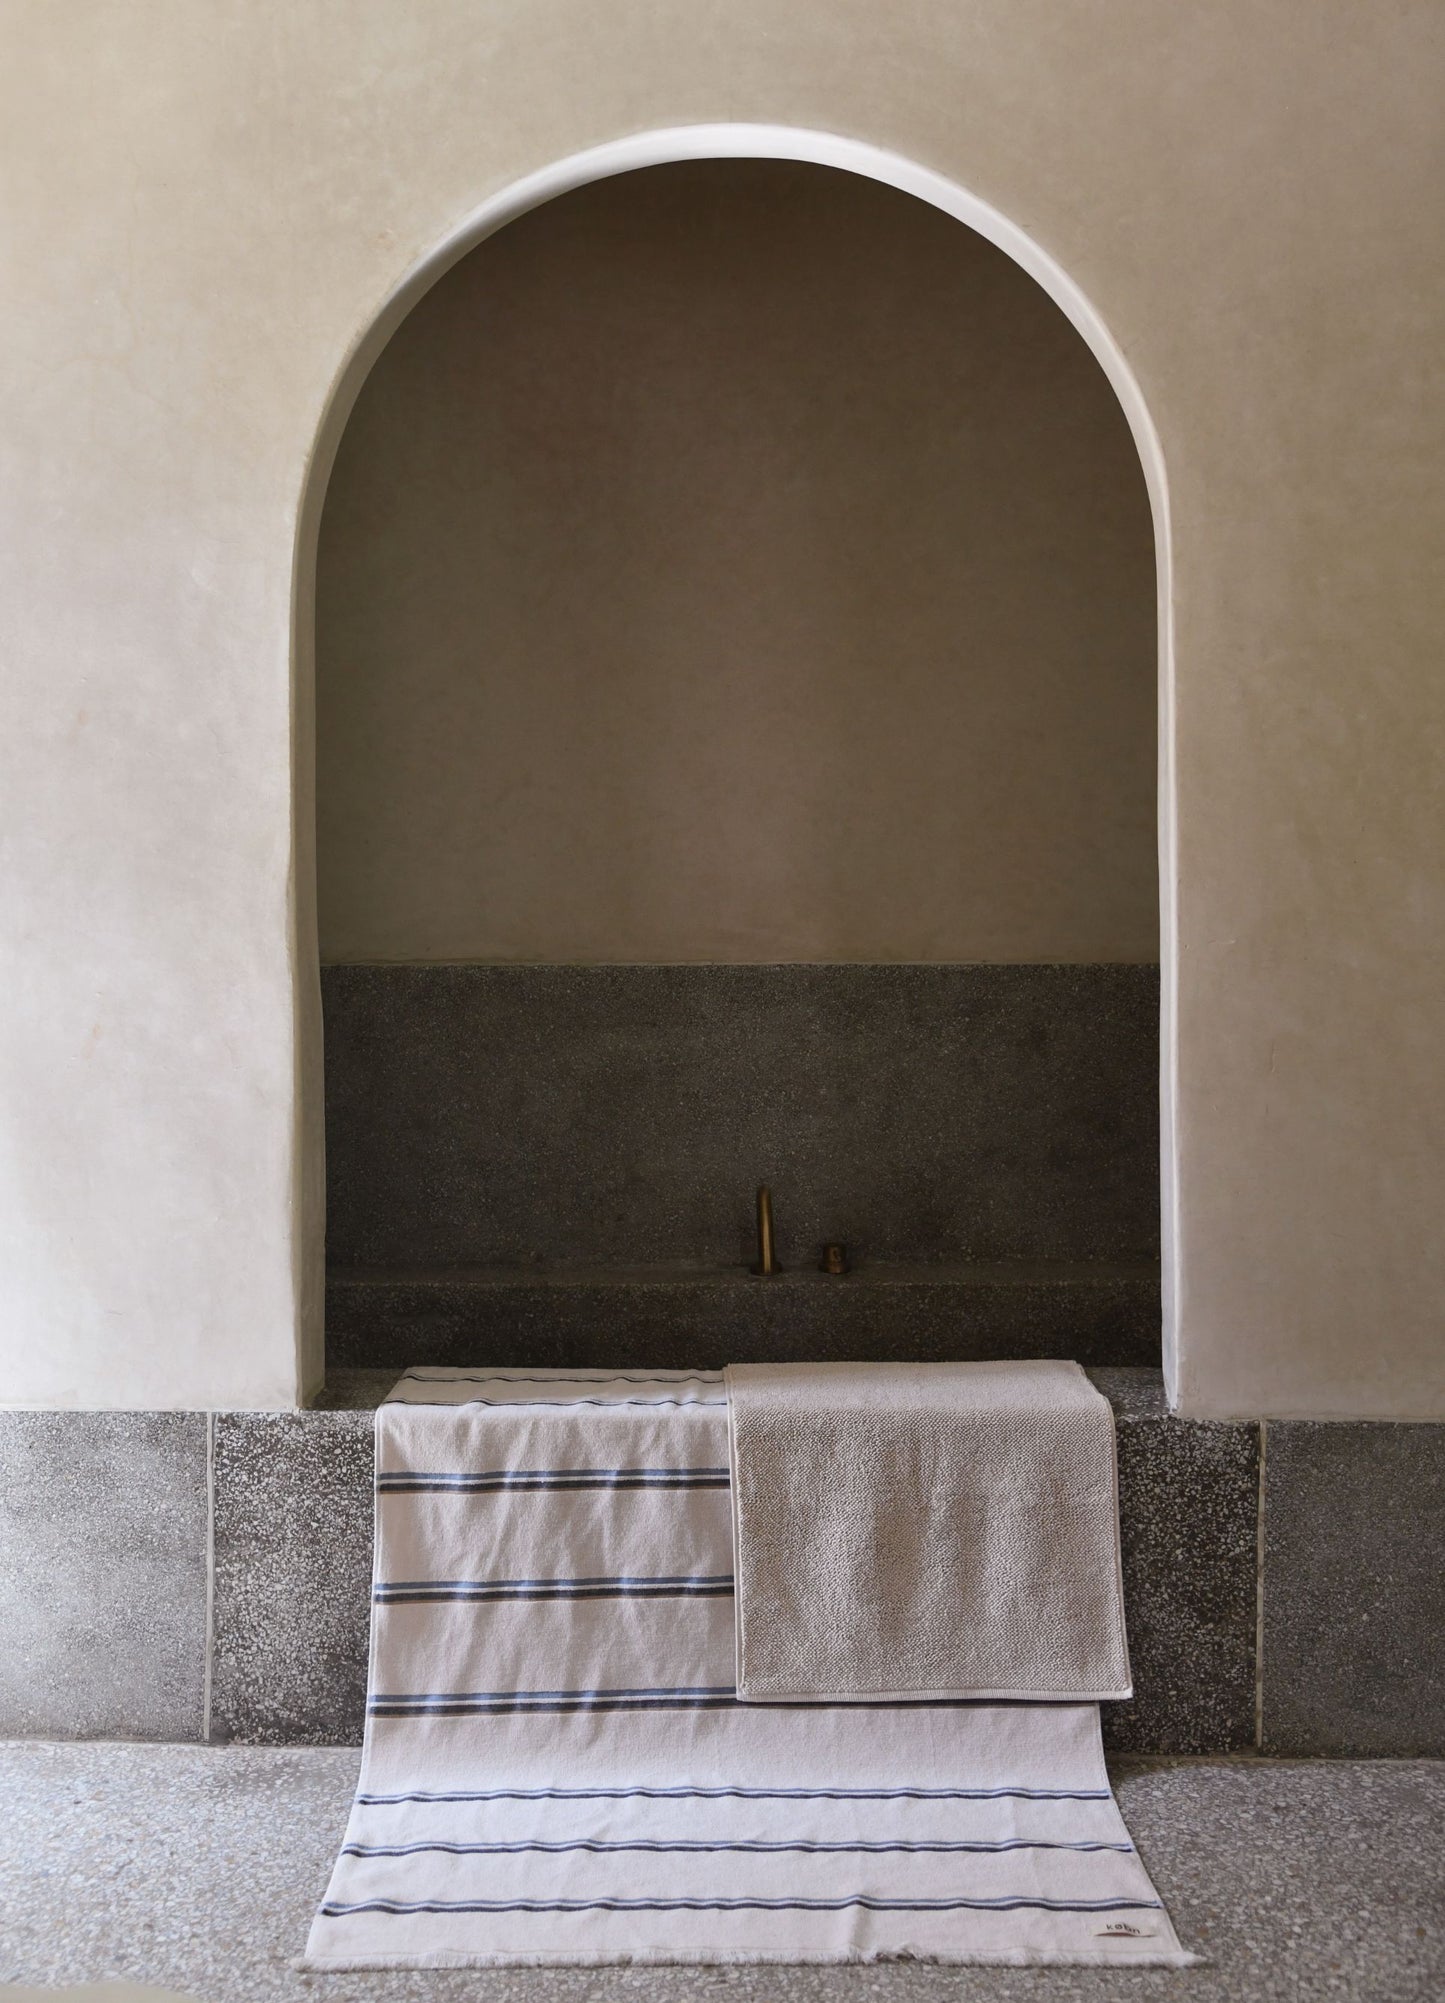 Købn : Bath Towel